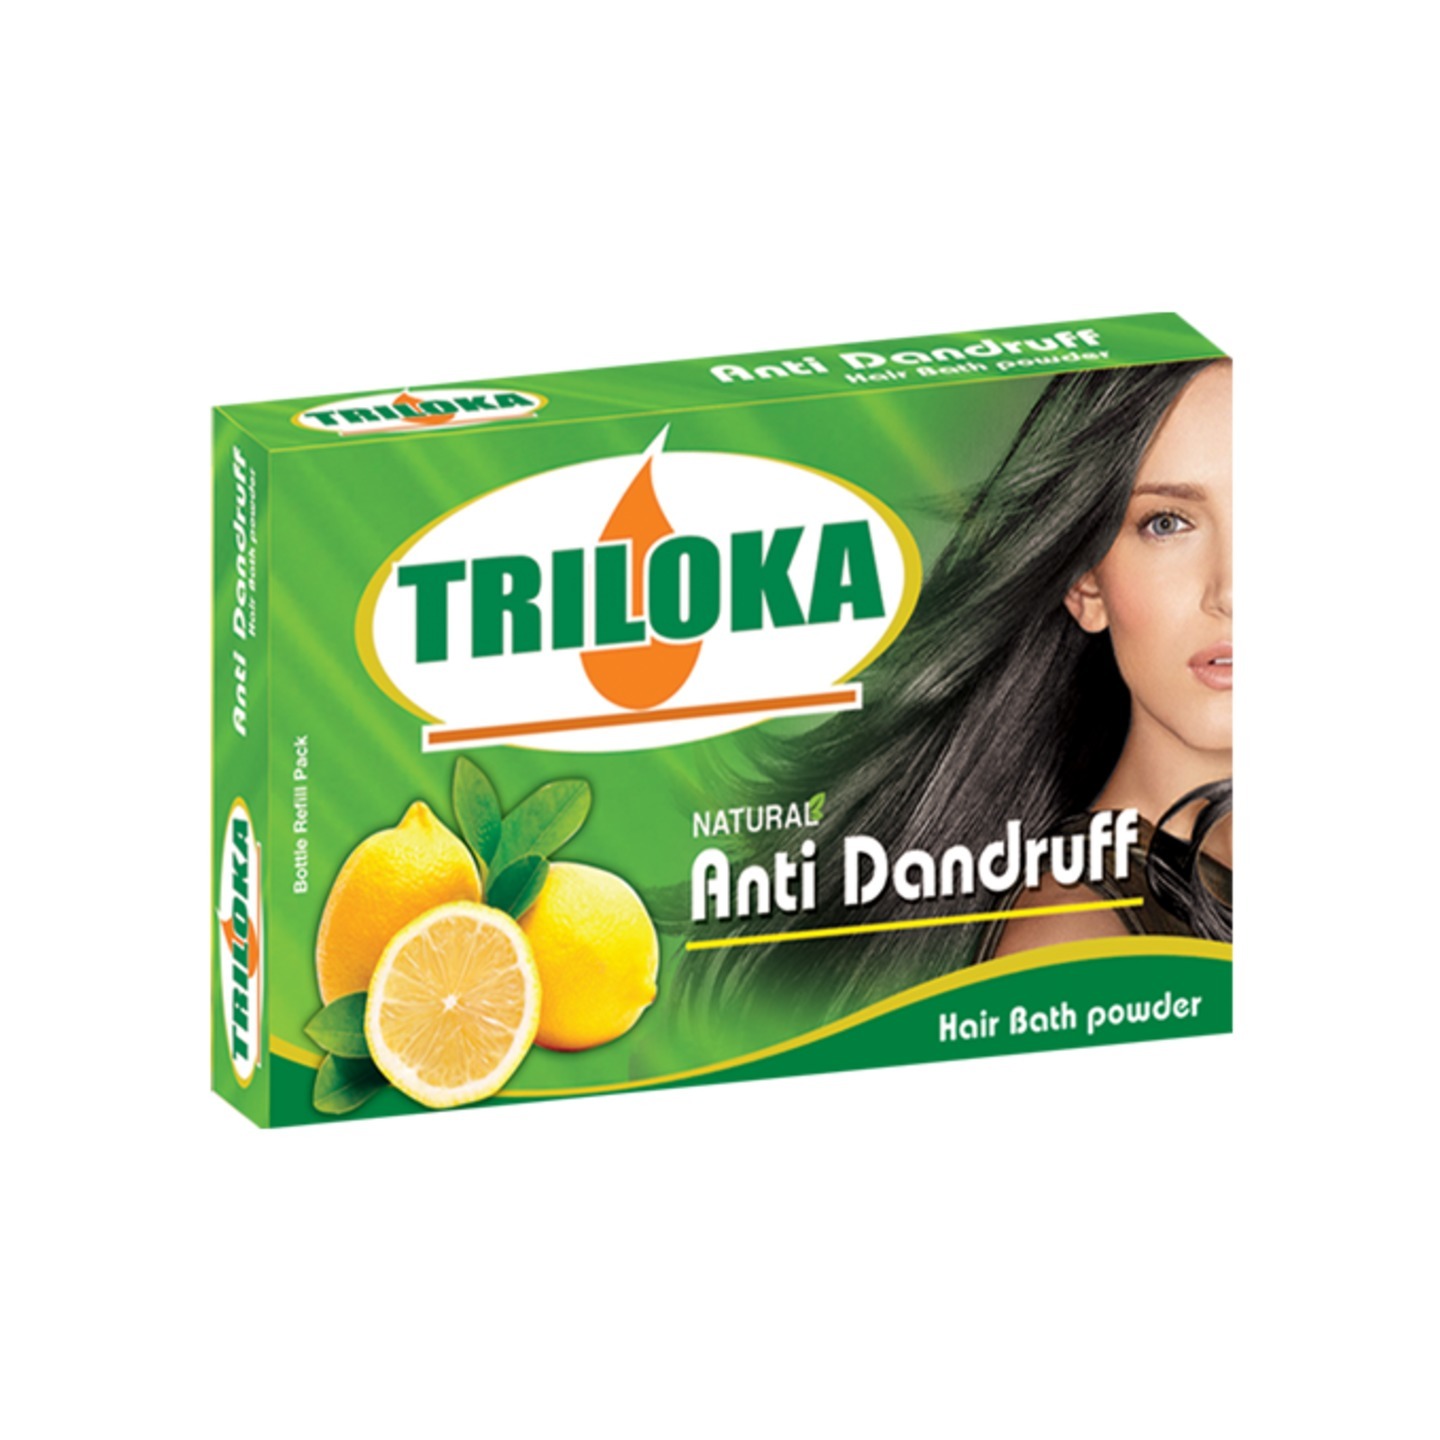 New Triloka Anti Dandruff Hair Bathing Powder